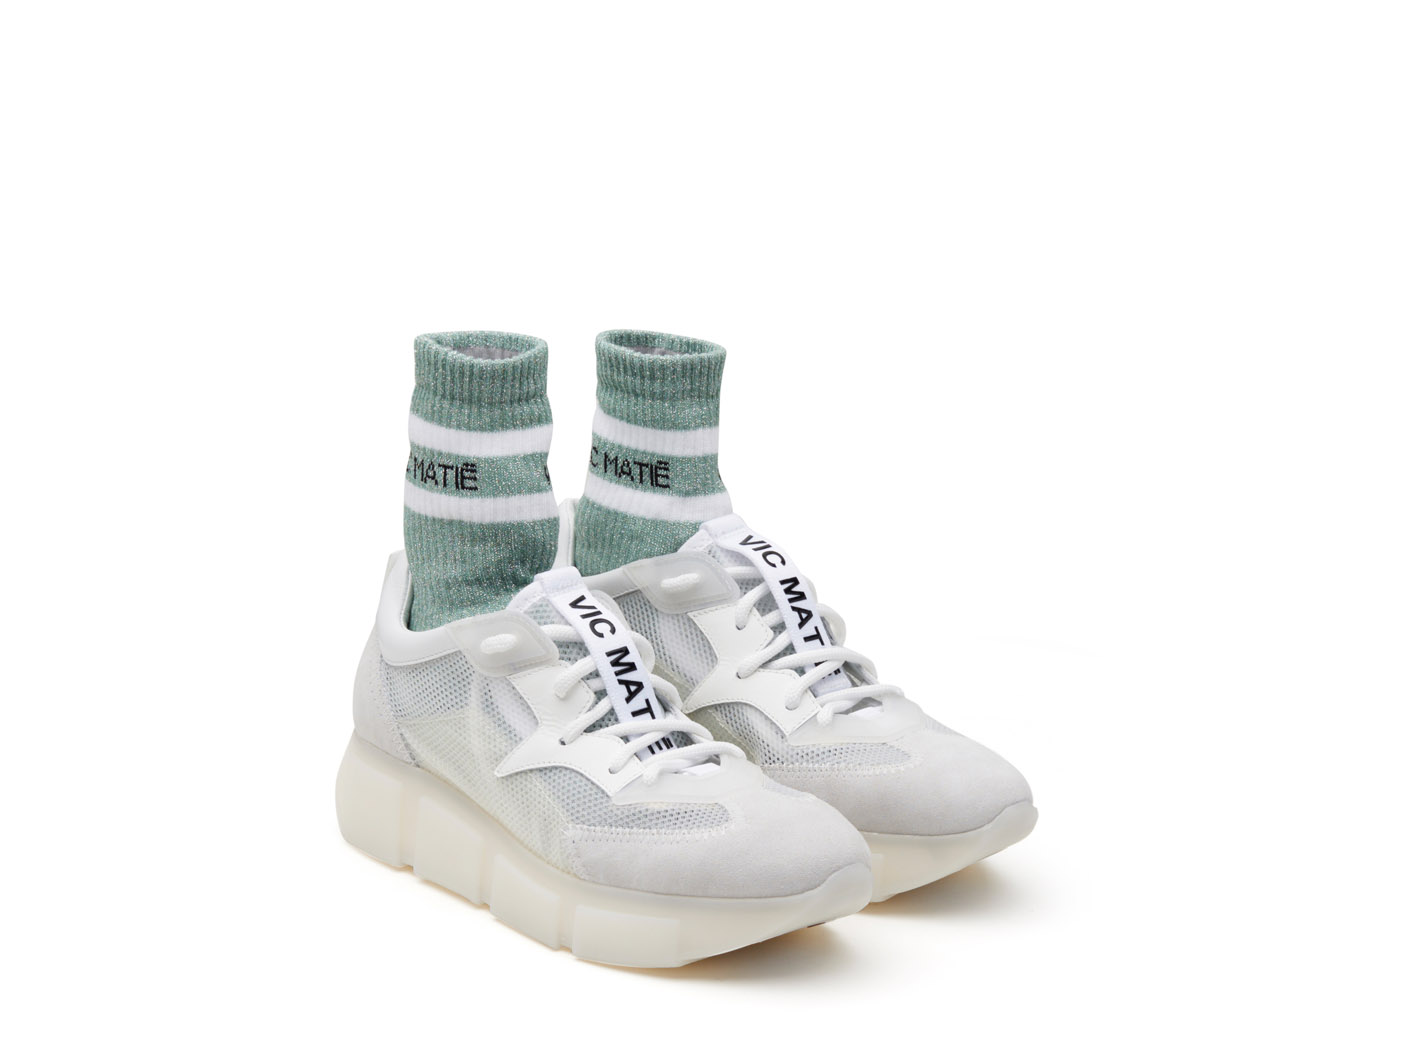 VIC MATIE 3706 Damen Plateau-Sneaker weiss white 102